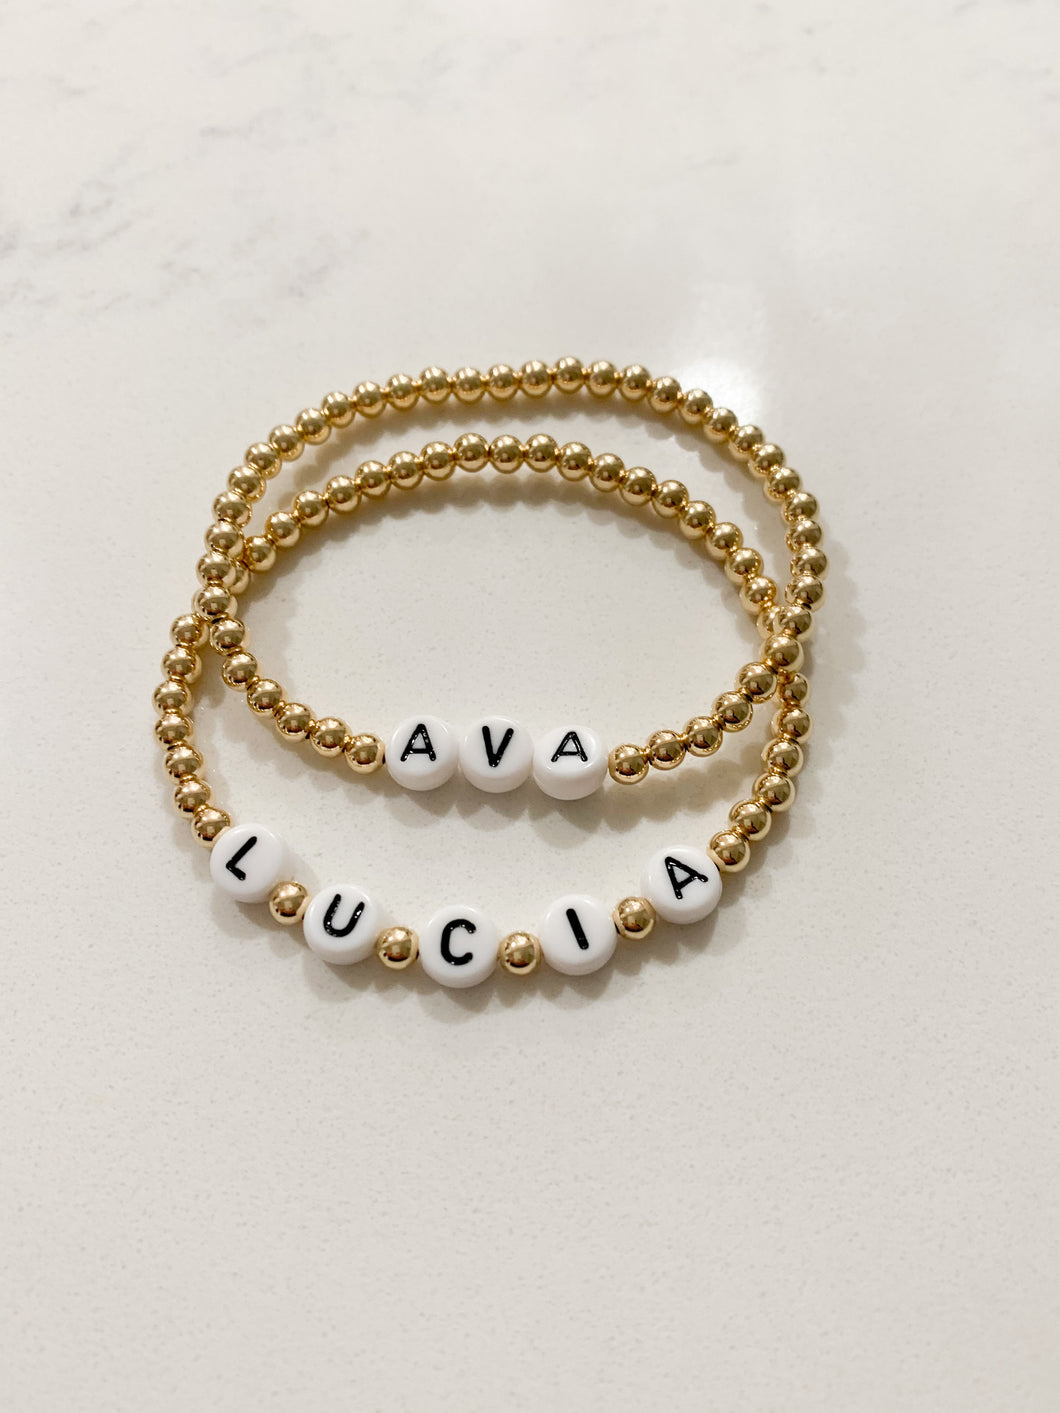 Name Bracelets - Gold Beads